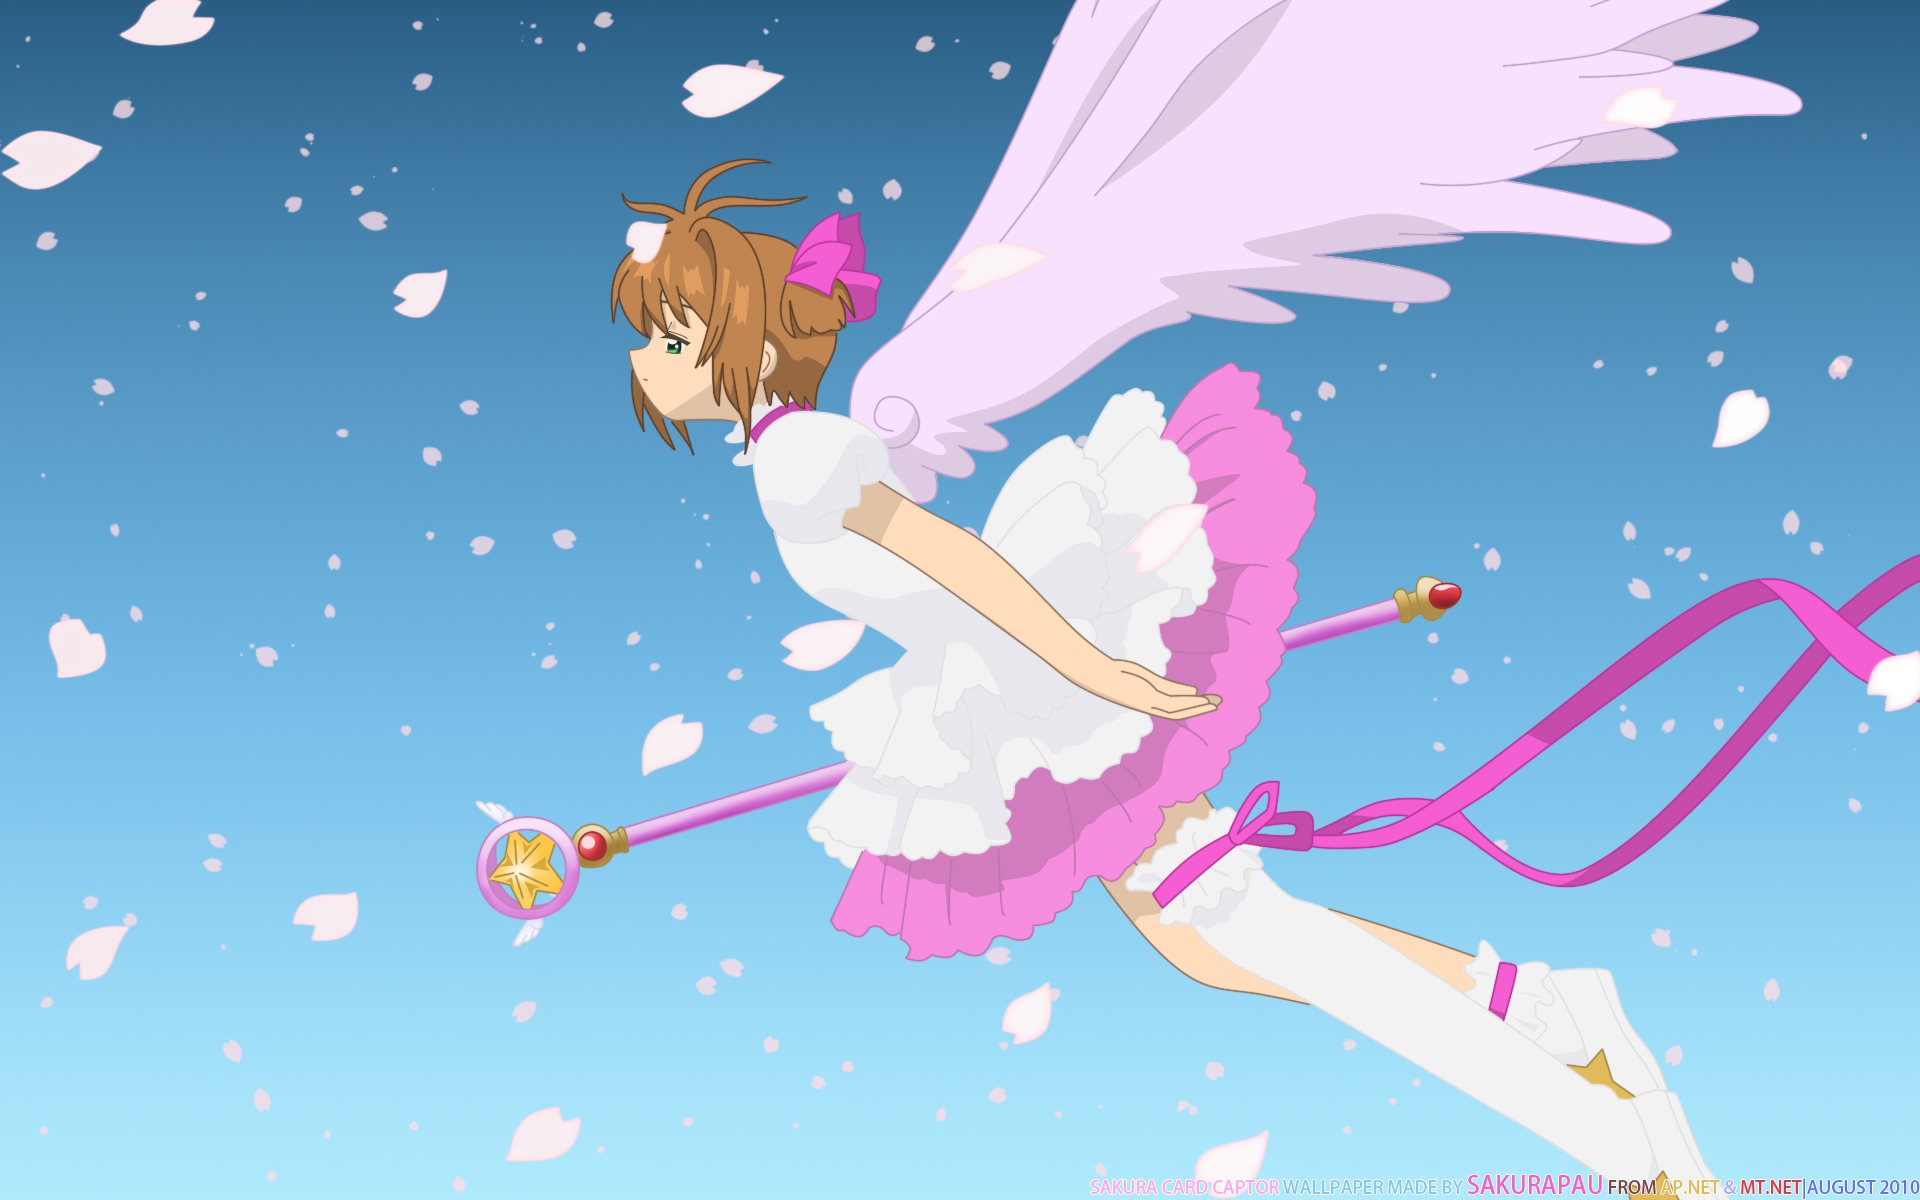 Anime desktop wallpaper featuring Cardcaptor Sakura.